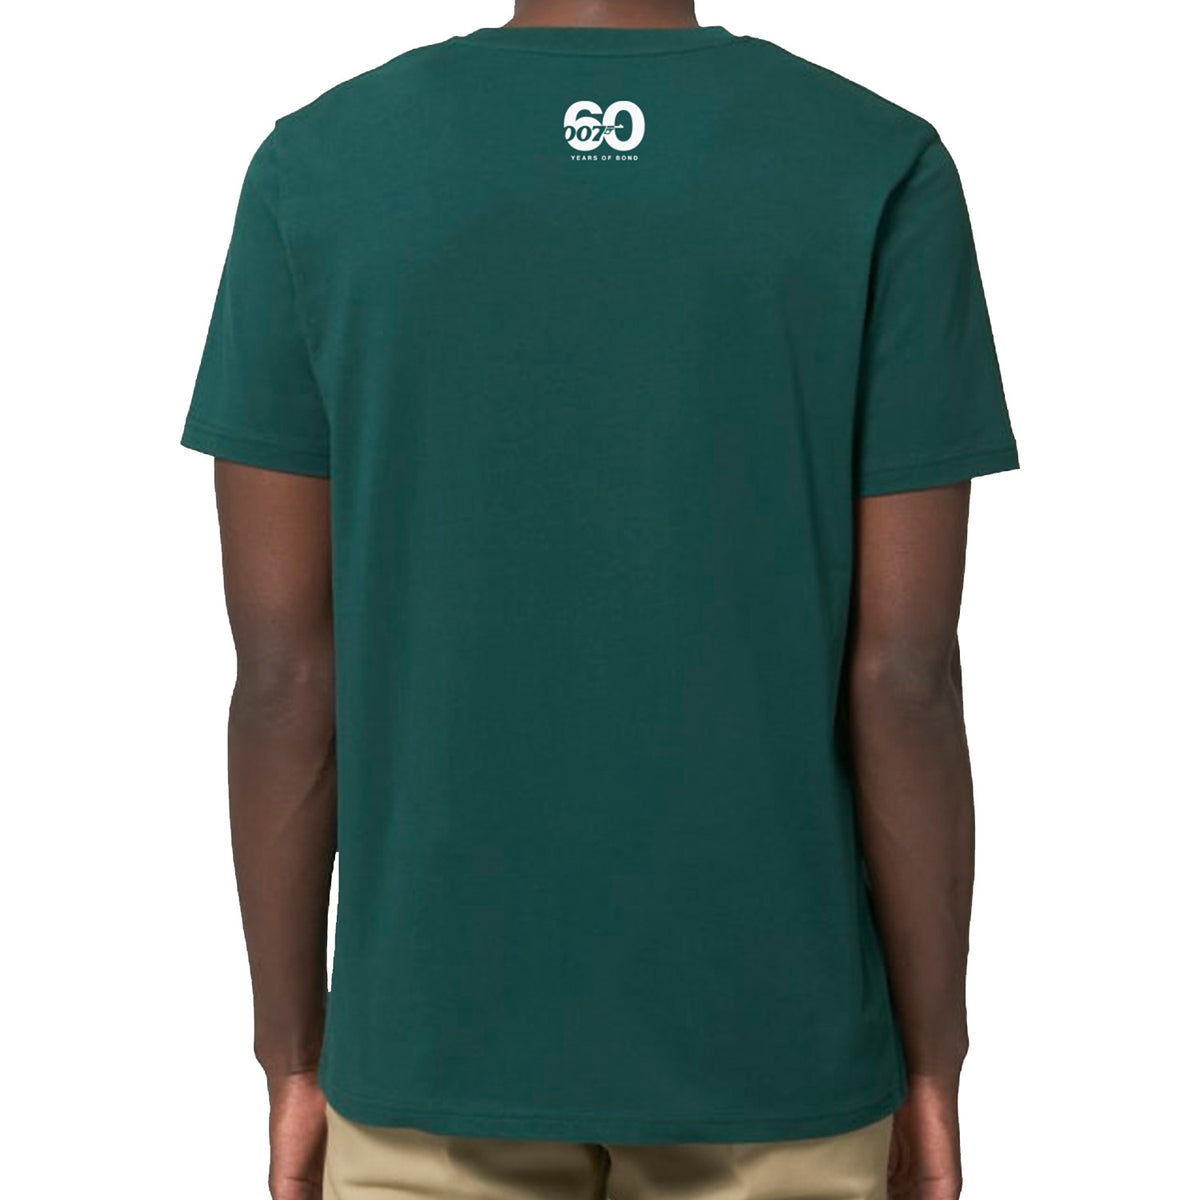 James Bond Baize Green 60th Anniversary T-shirt (Outlet Item)